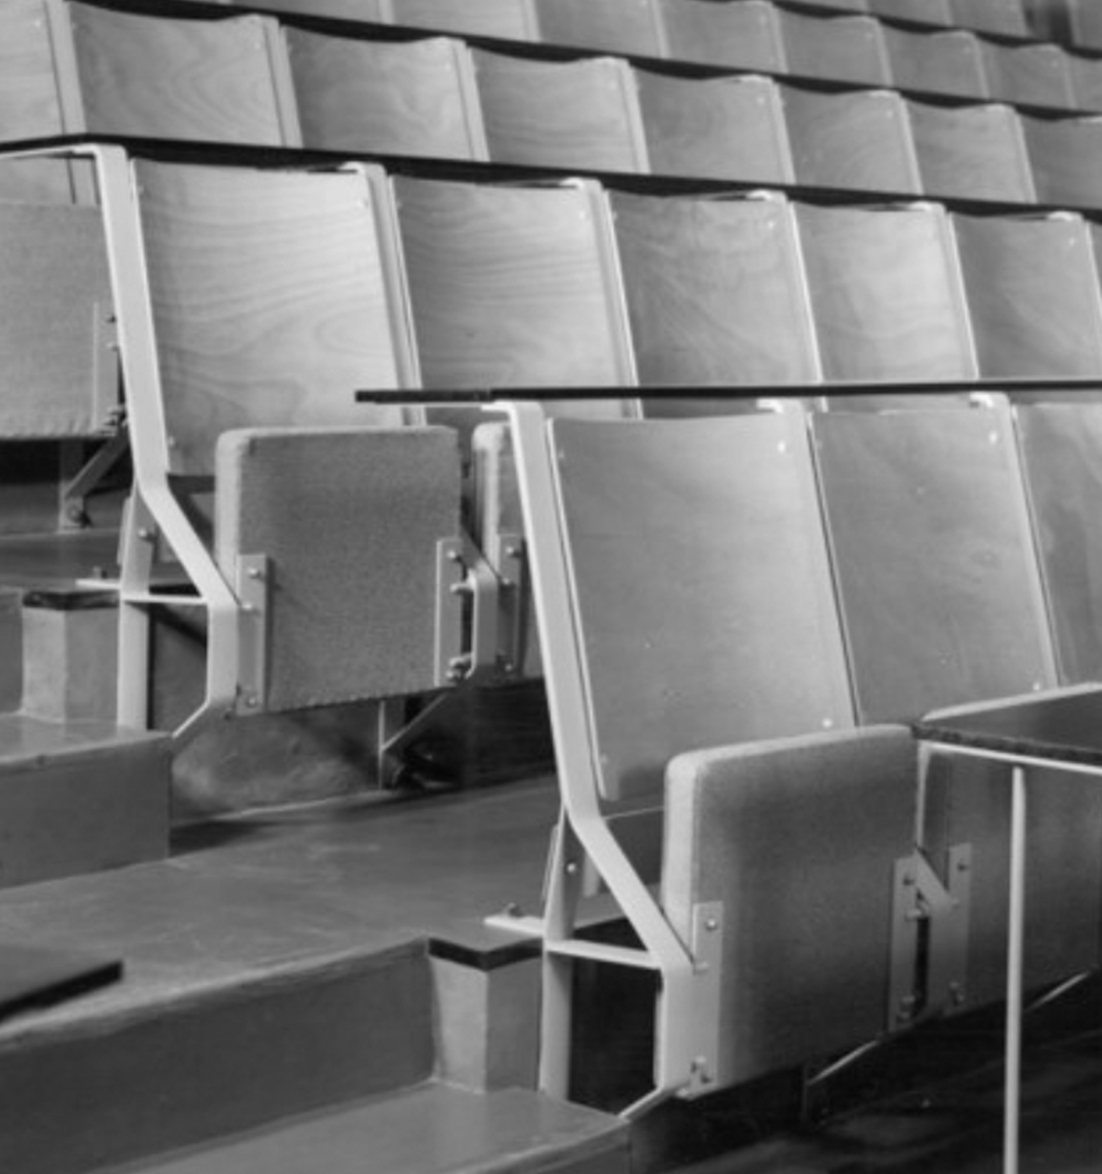 Original auditorium seating by Race Furniture